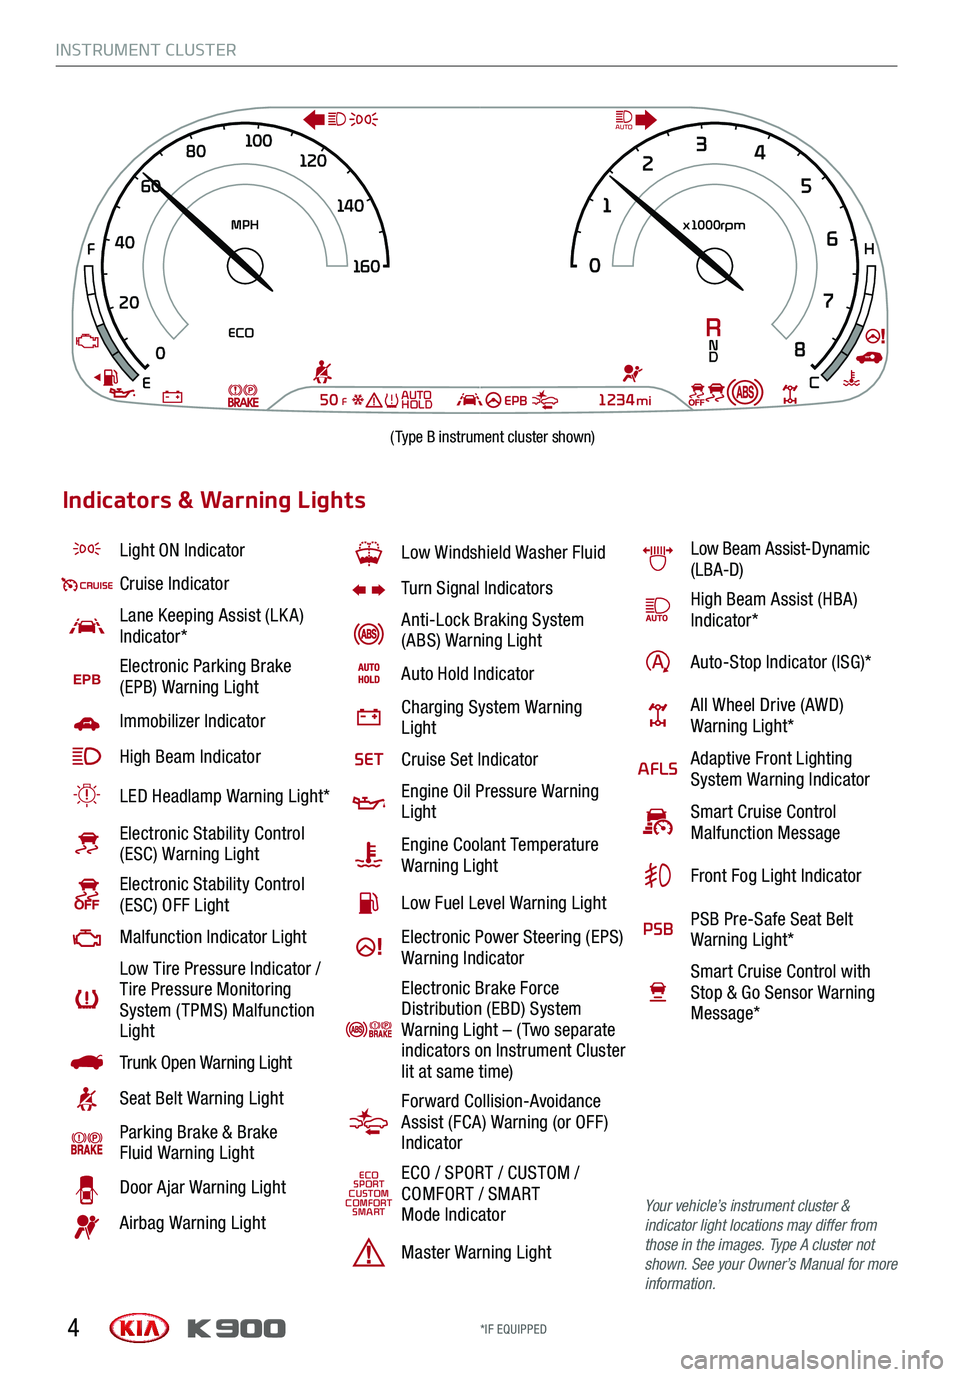 KIA K900 2019  Features and Functions Guide INSTRUMENT CLUSTER
4
Light ON Indicator 
Cruise Indicator
Lane Keeping Assist (LK A) Indicator*
EPBElectronic Parking Brake  (EPB) Warning Light
Immobilizer Indicator
High Beam Indicator
LED Headlamp 